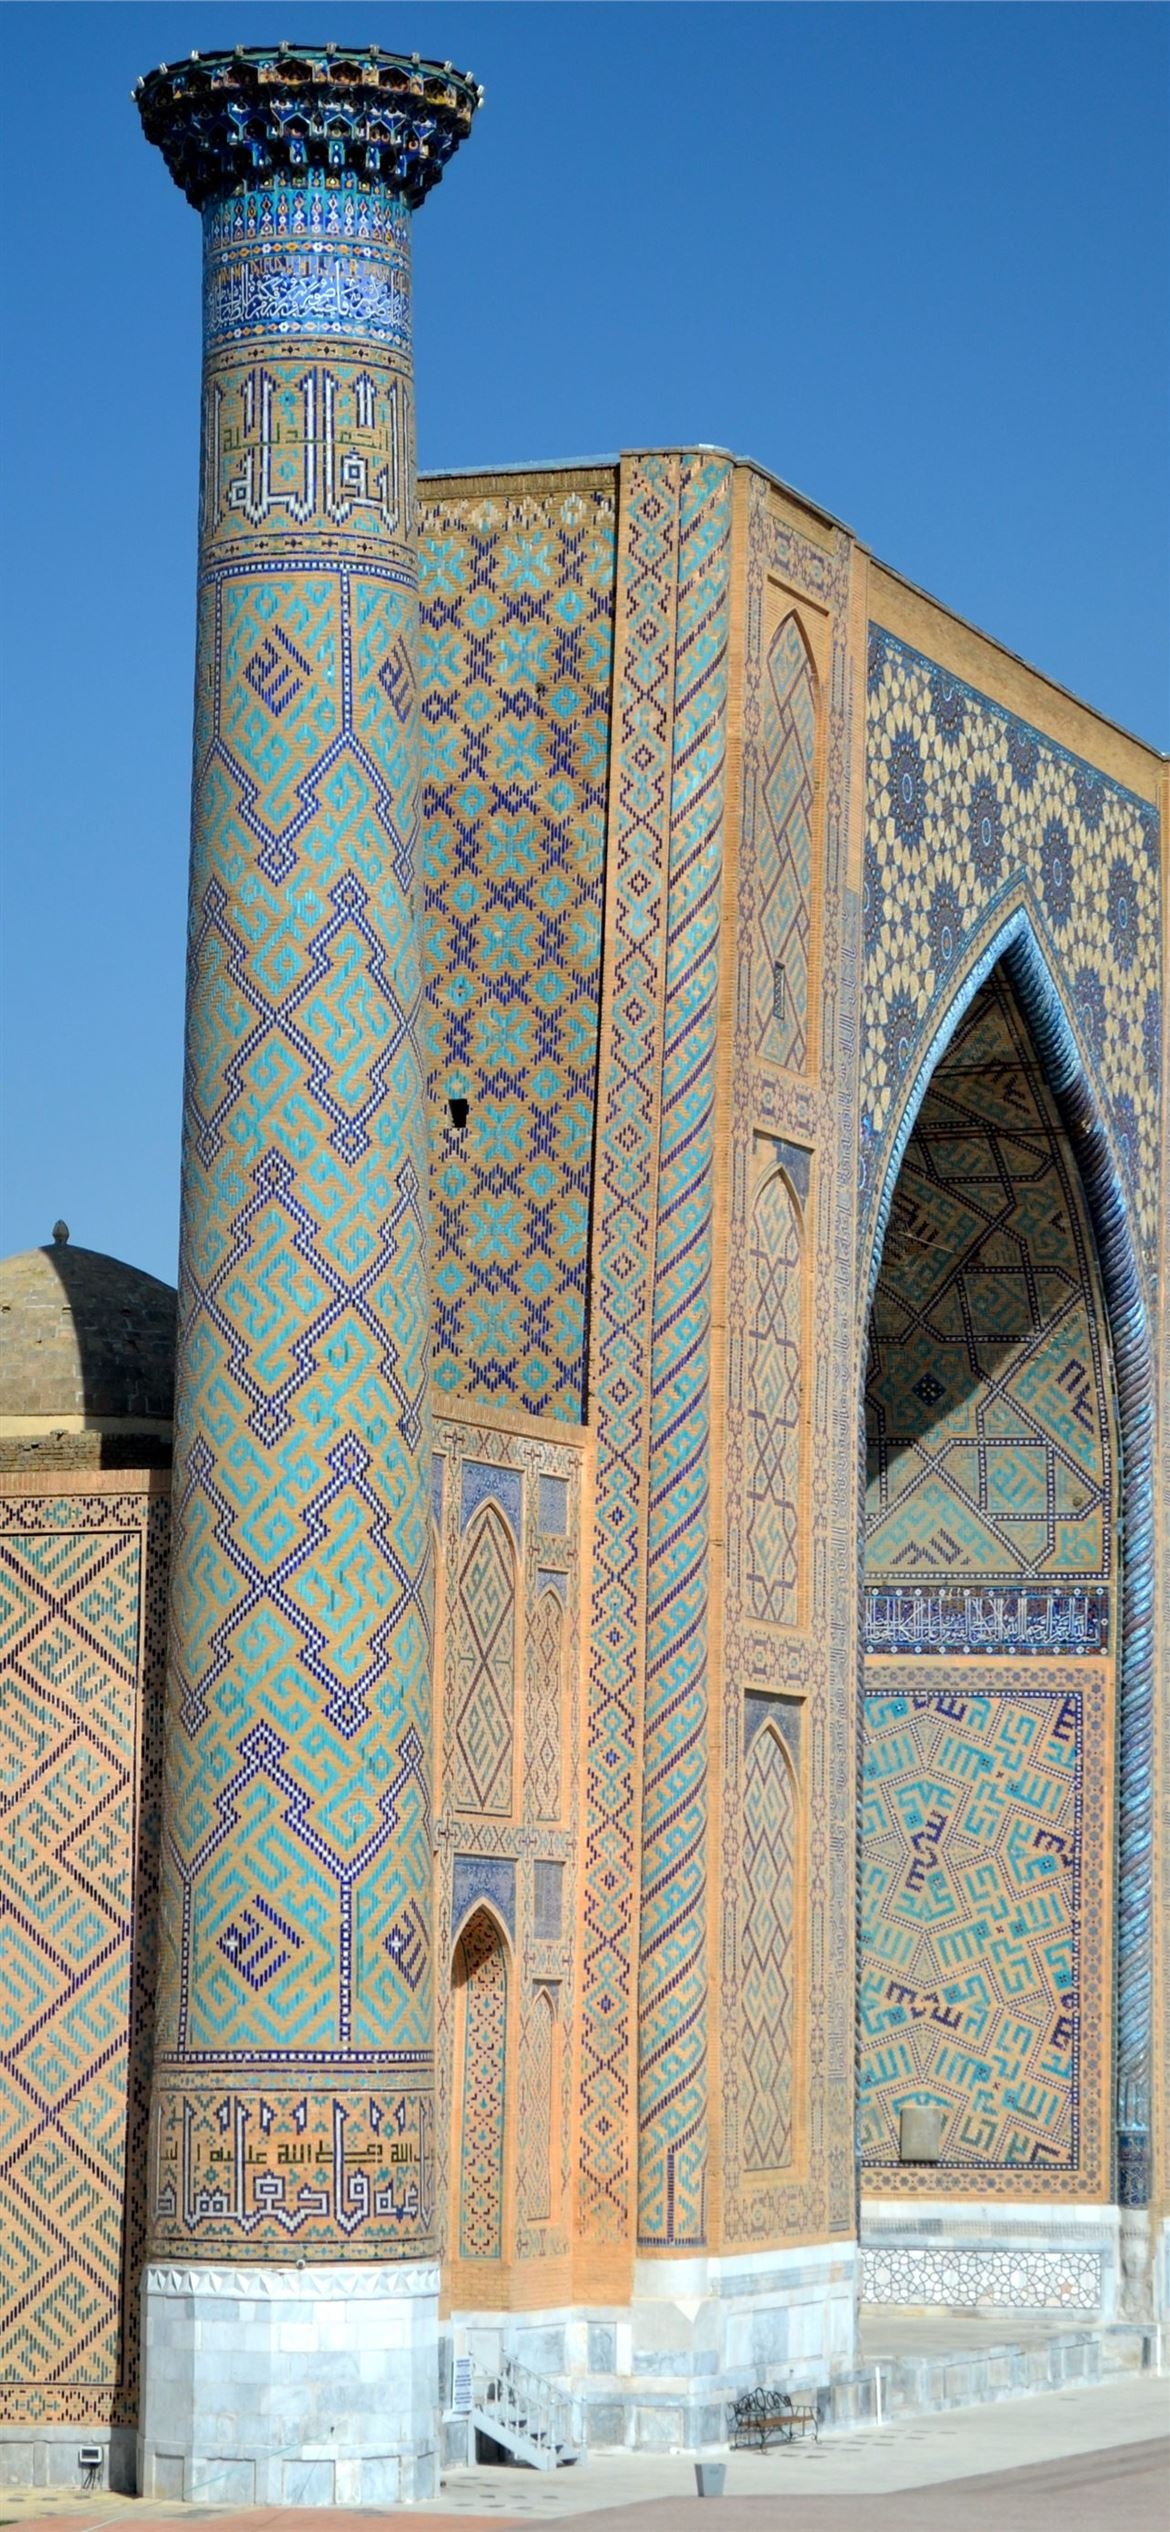 Uzbekistan iPhone wallpapers, Free download, Travel vibes, Captivating visuals, 1170x2540 HD Phone